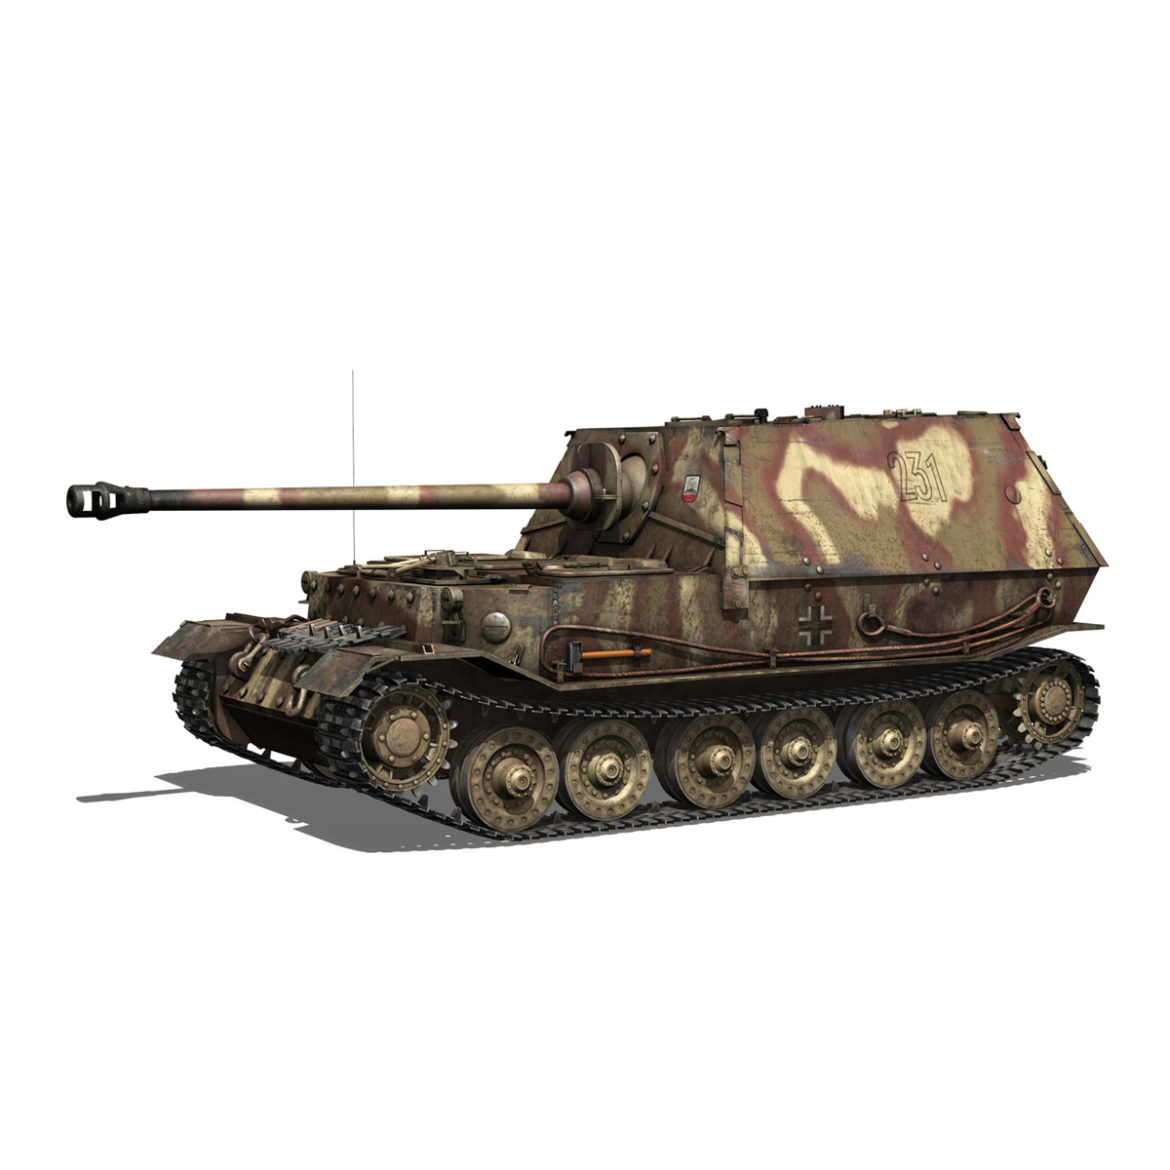 ferdinand tank destroyer – tiger (p) – 231 3d model 3ds fbx c4d lwo obj 295019